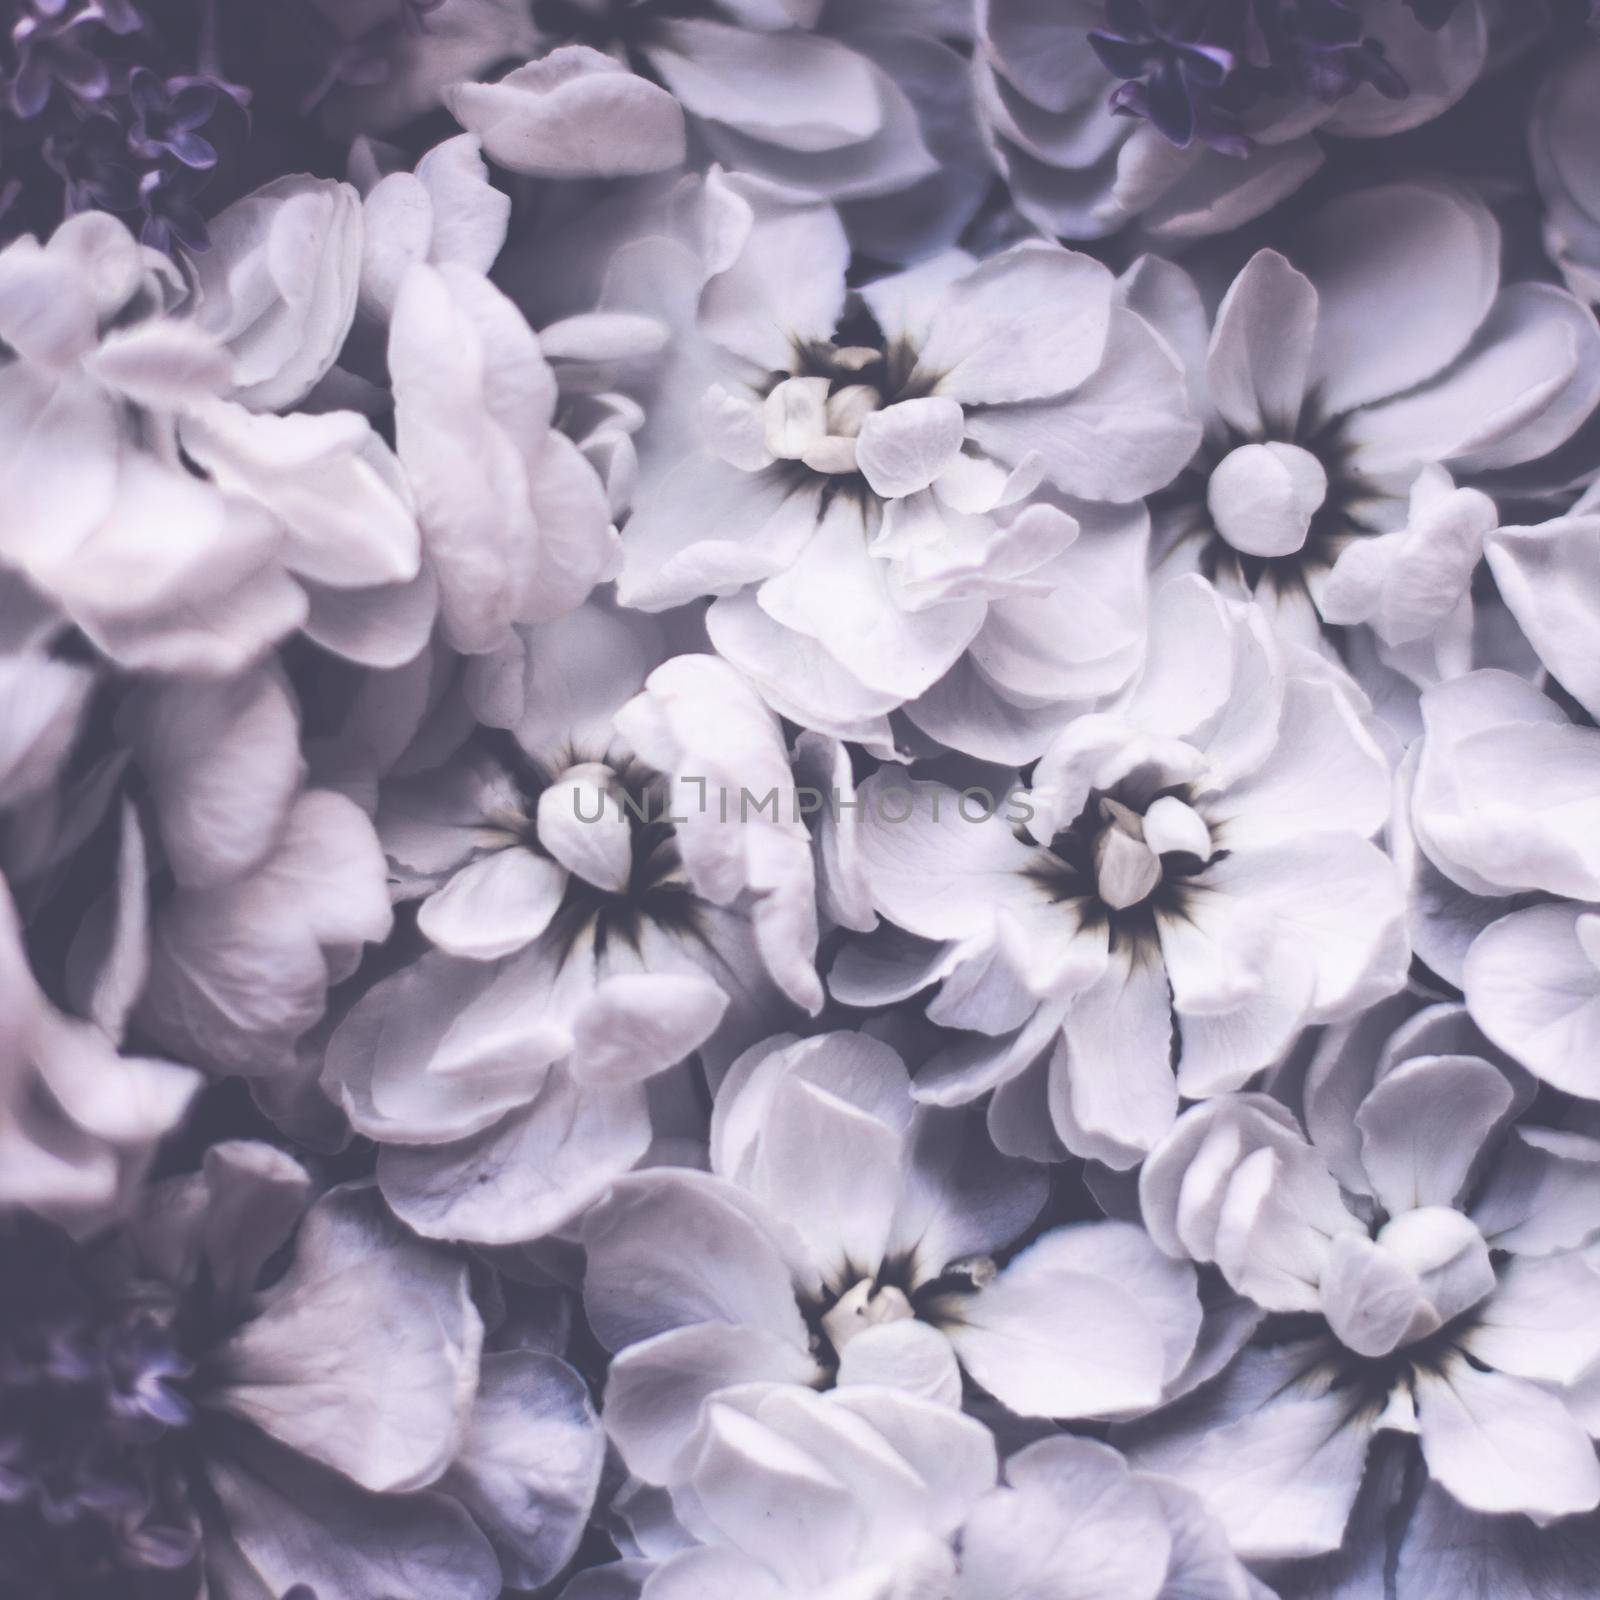 Vintage floral background by Anneleven